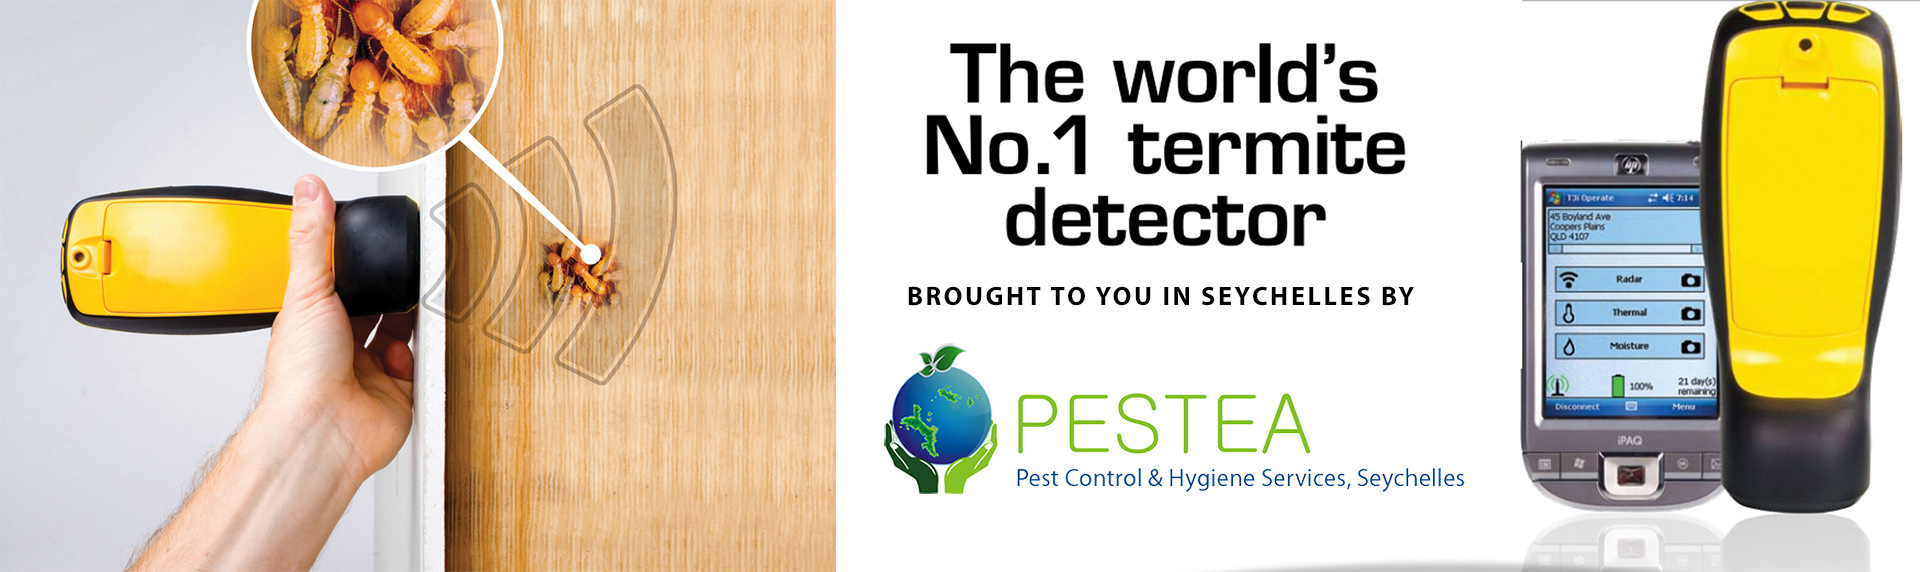 Pestea_termite_detection_in_Seychelles